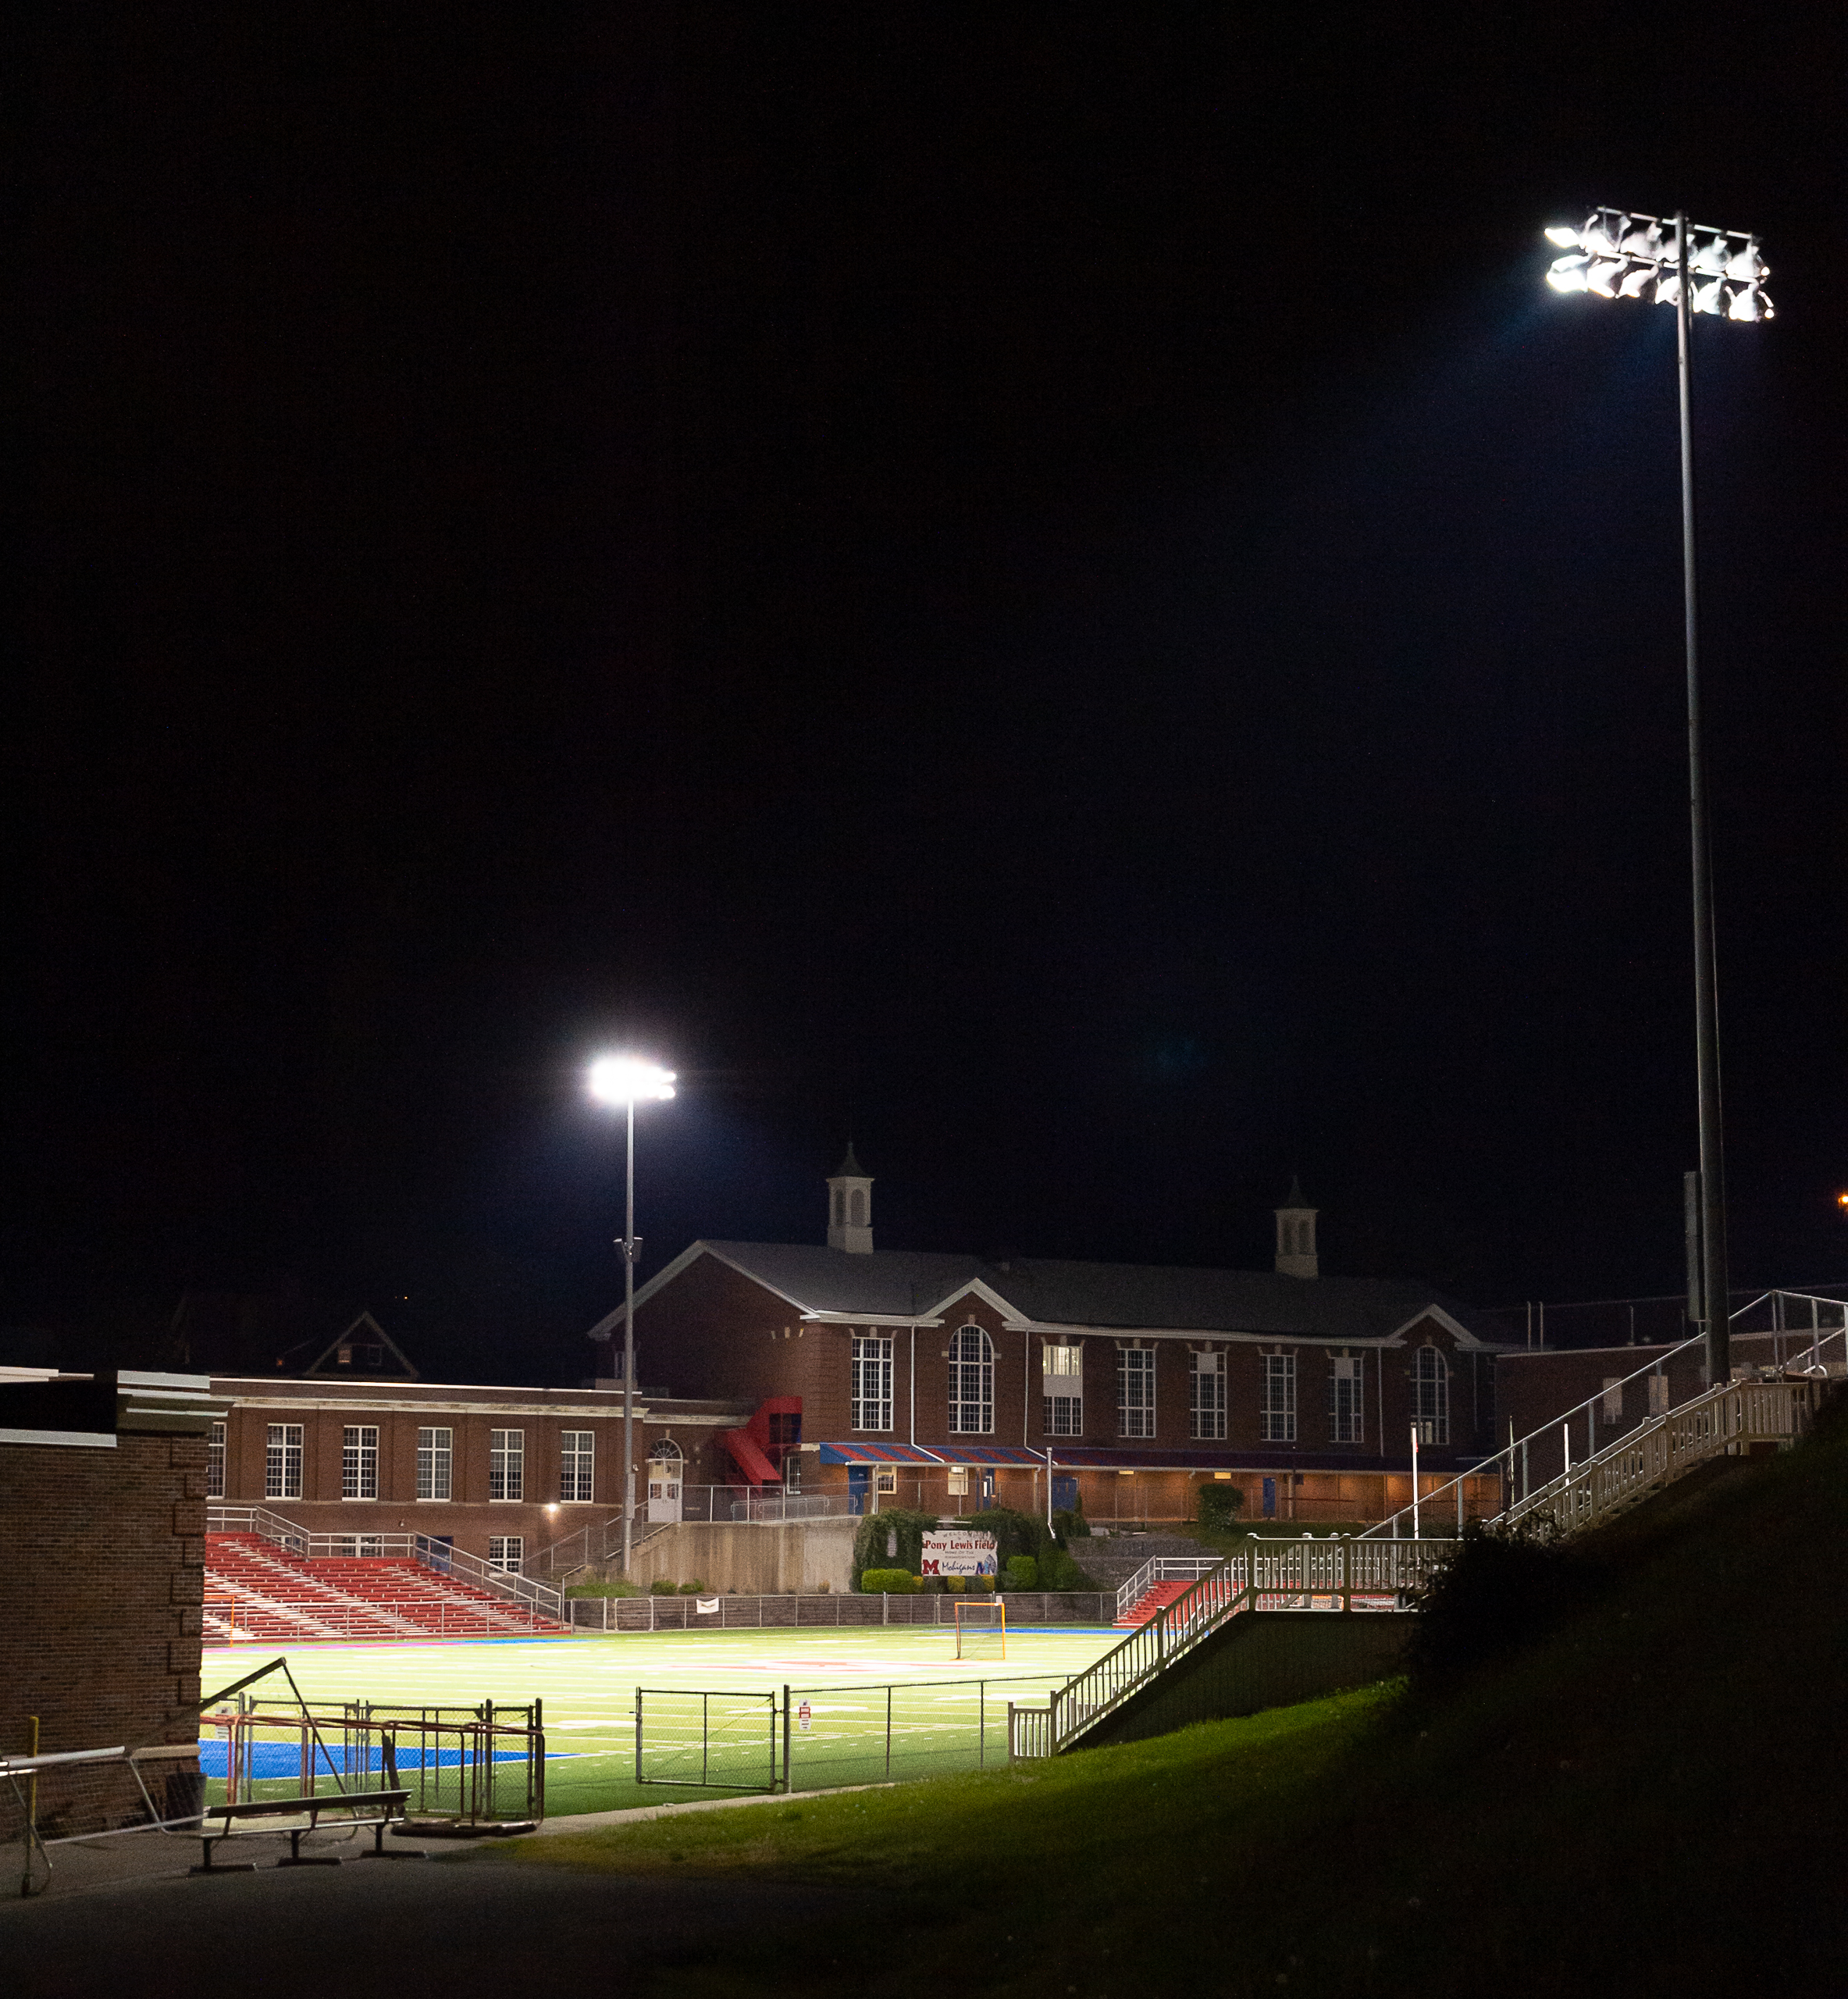 Morgantown High School's field lit up at night